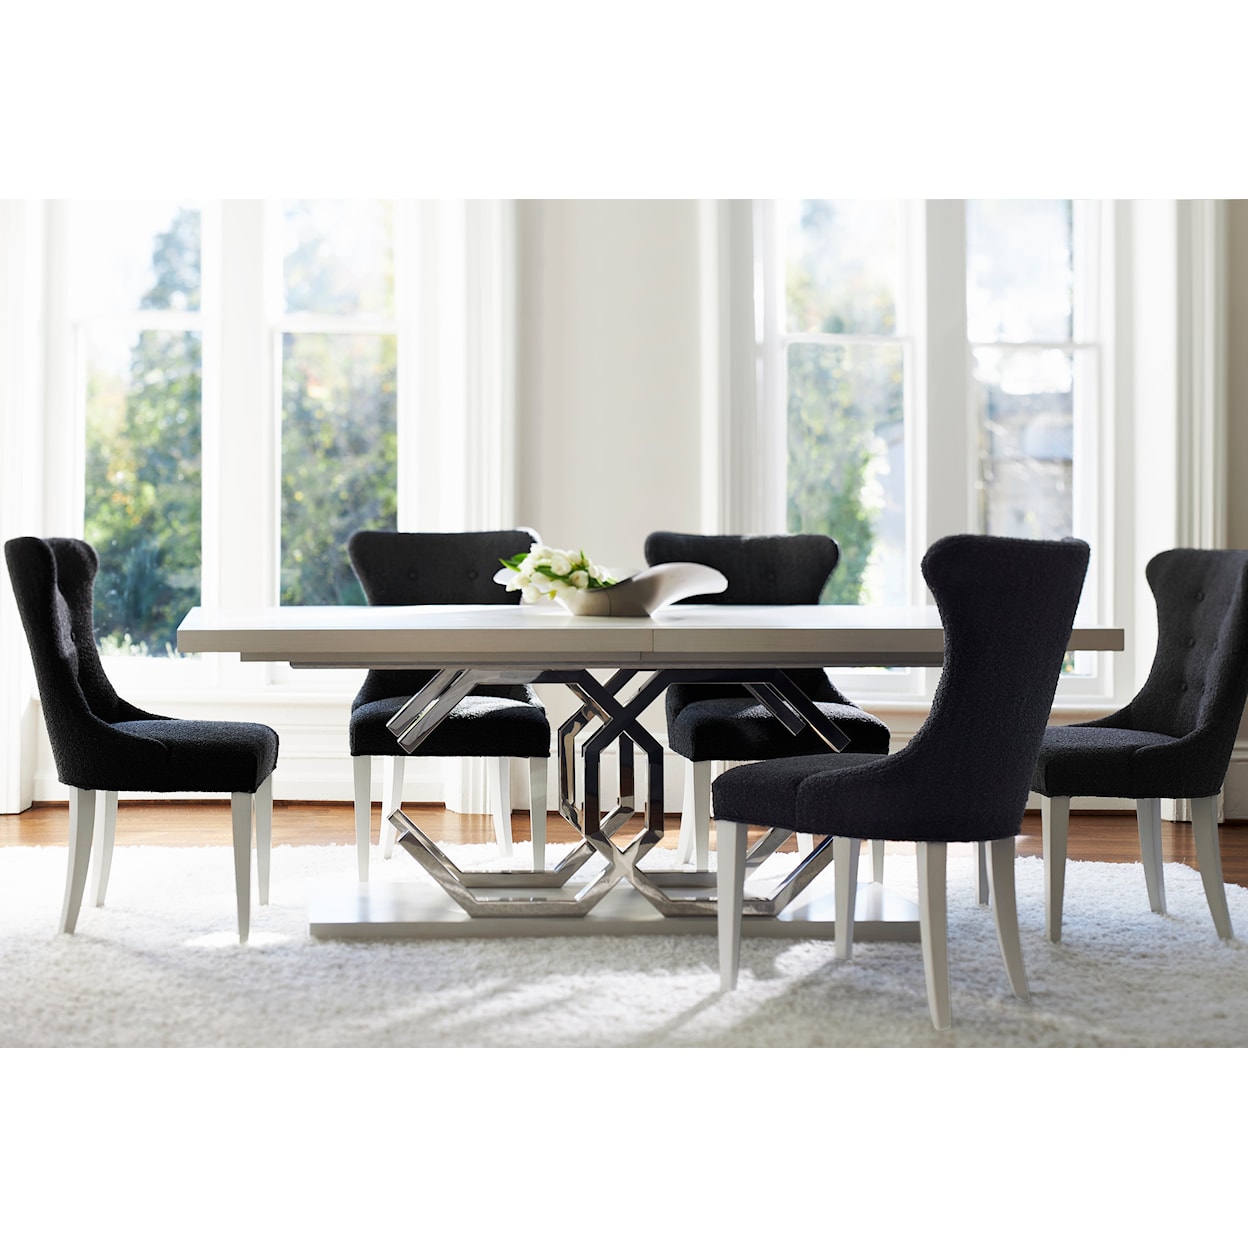 Bernhardt Silhouette Silhouette Dining Table